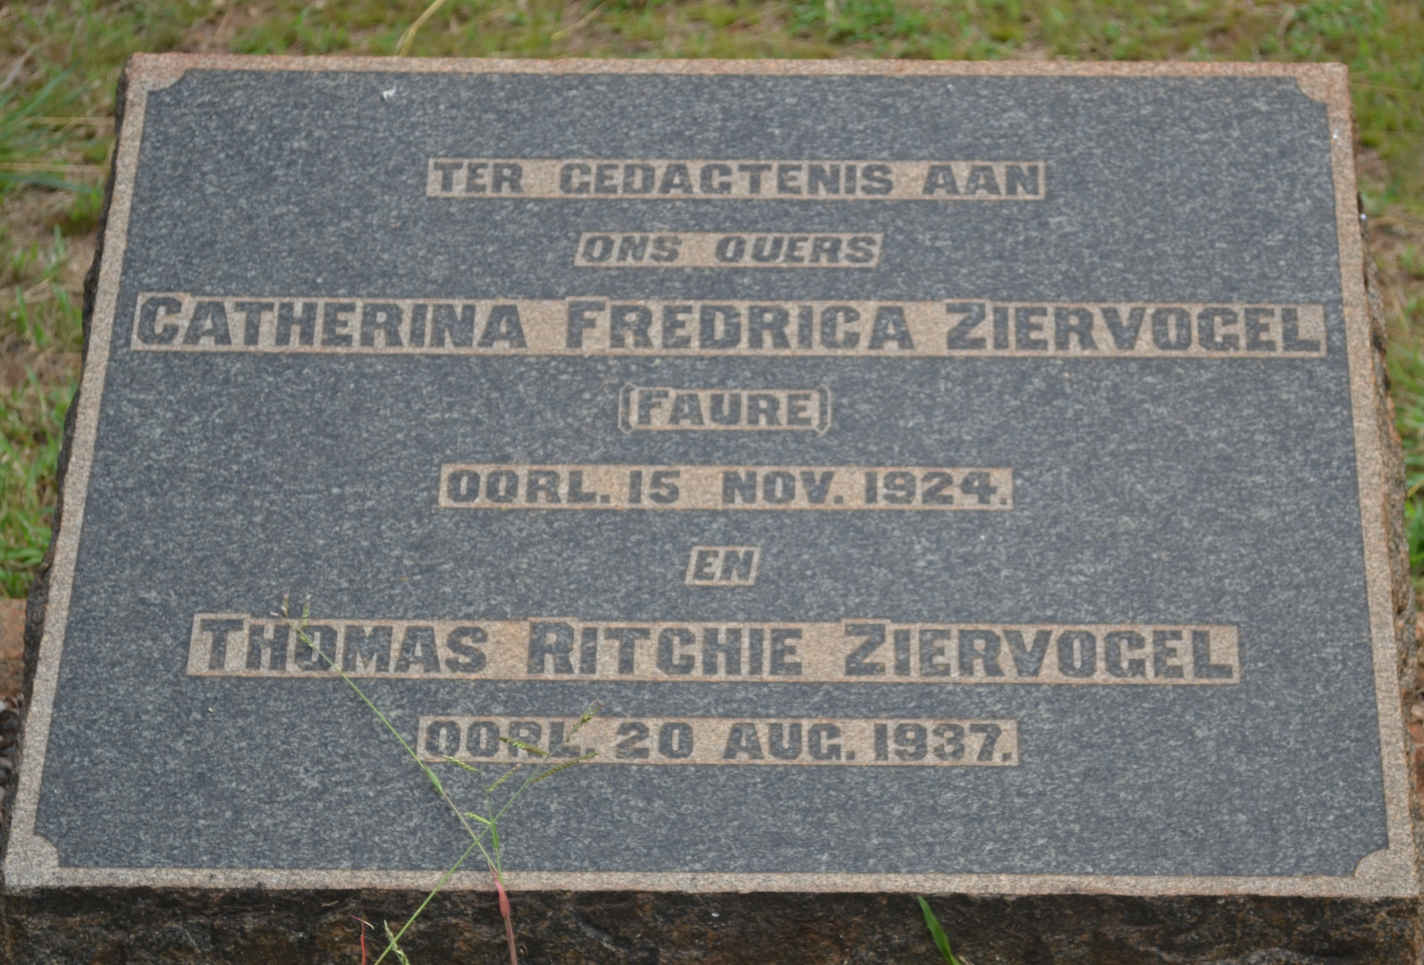 ZIERVOGEL Thomas Ritchie -1937 & Catherina Fredrica FAURE -1924